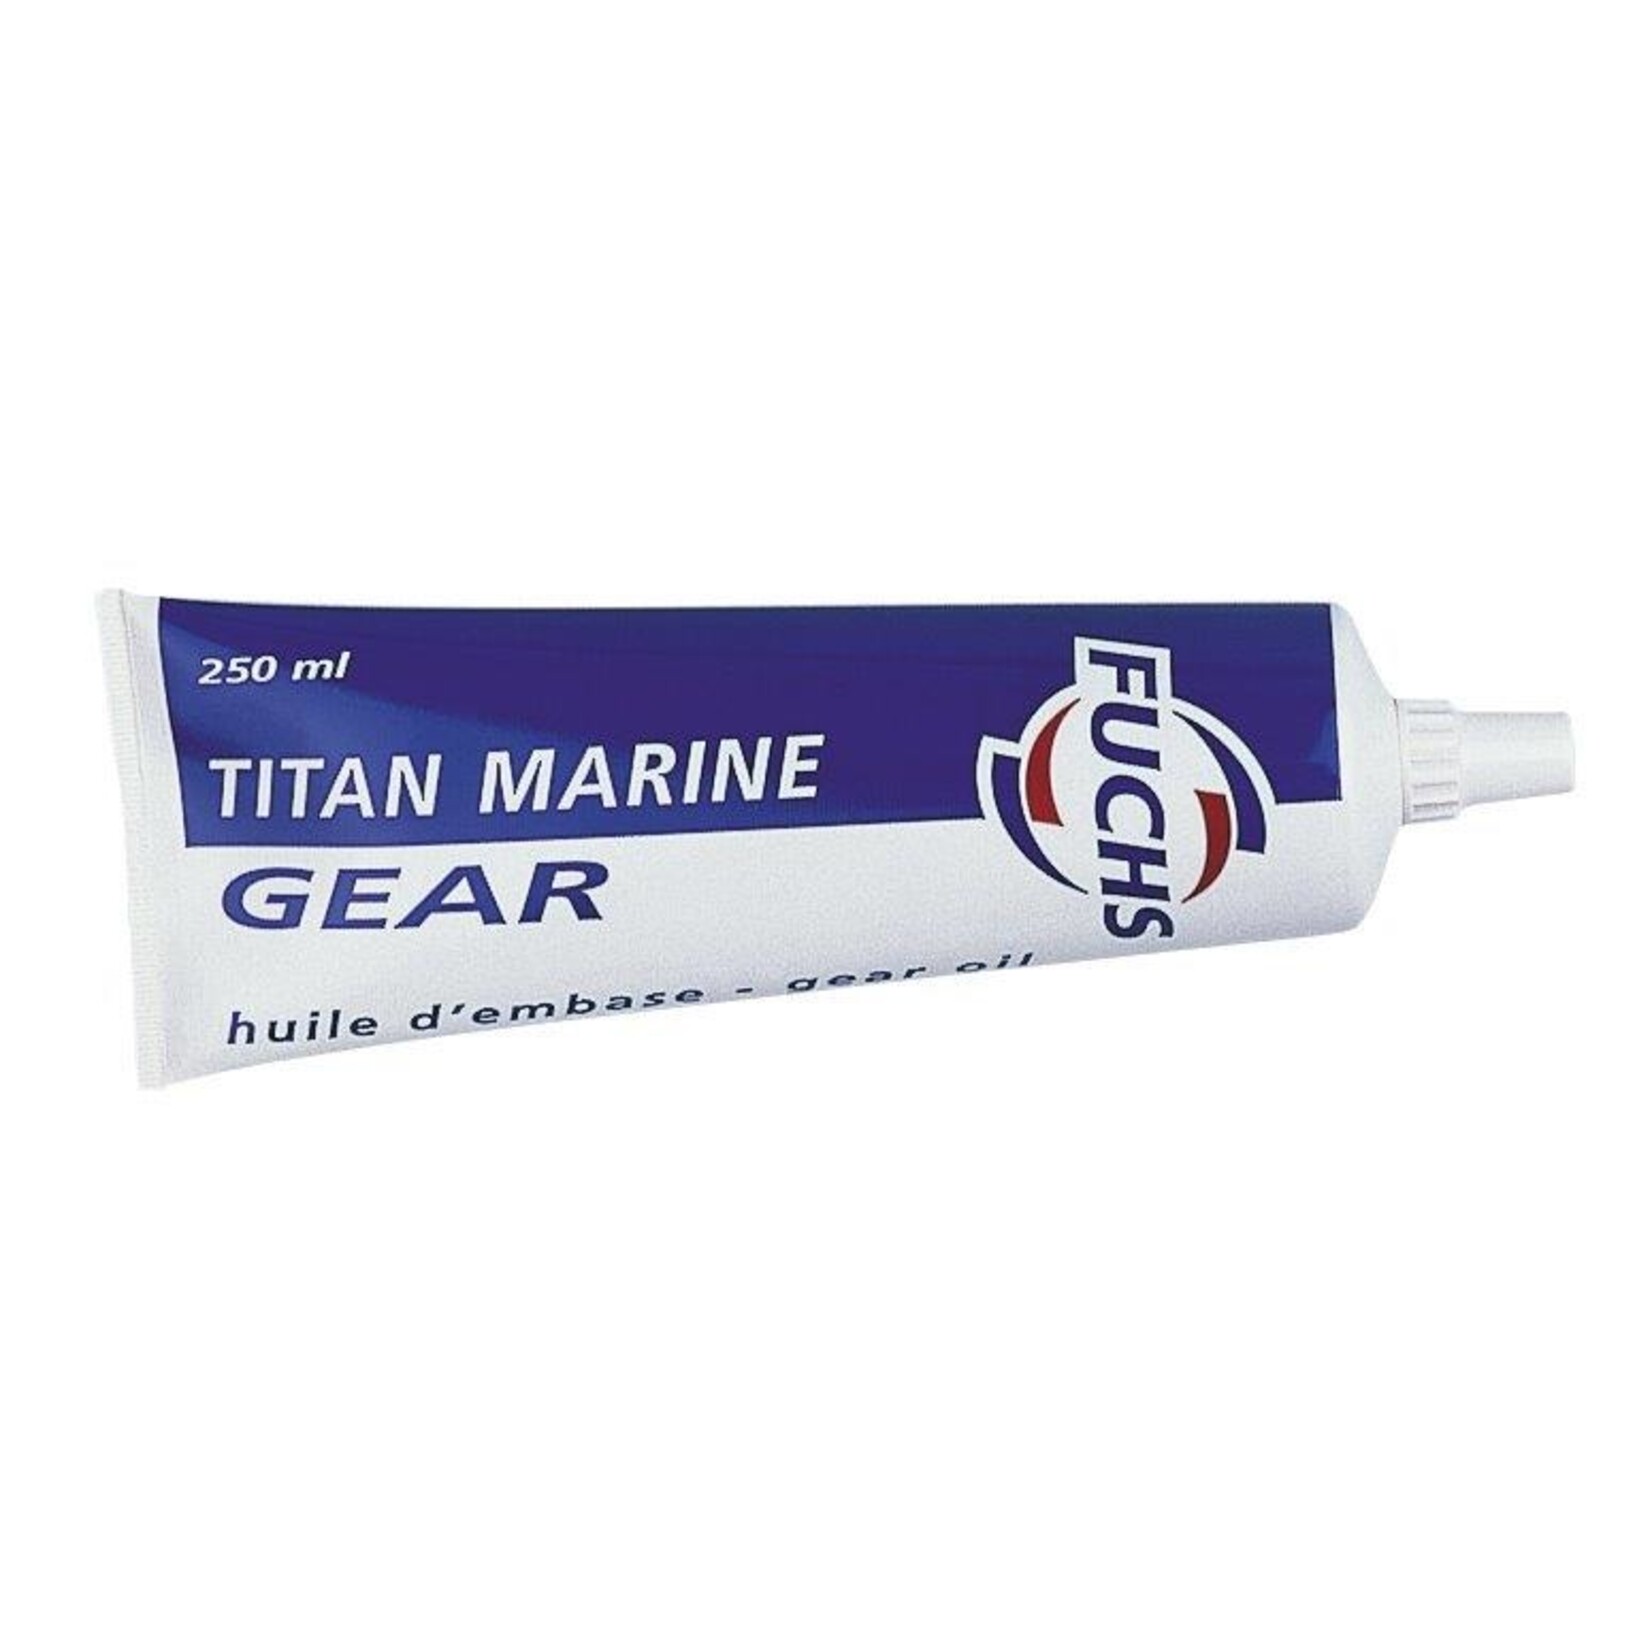 Plastimo Oil titan marine gear mp 0.25 l